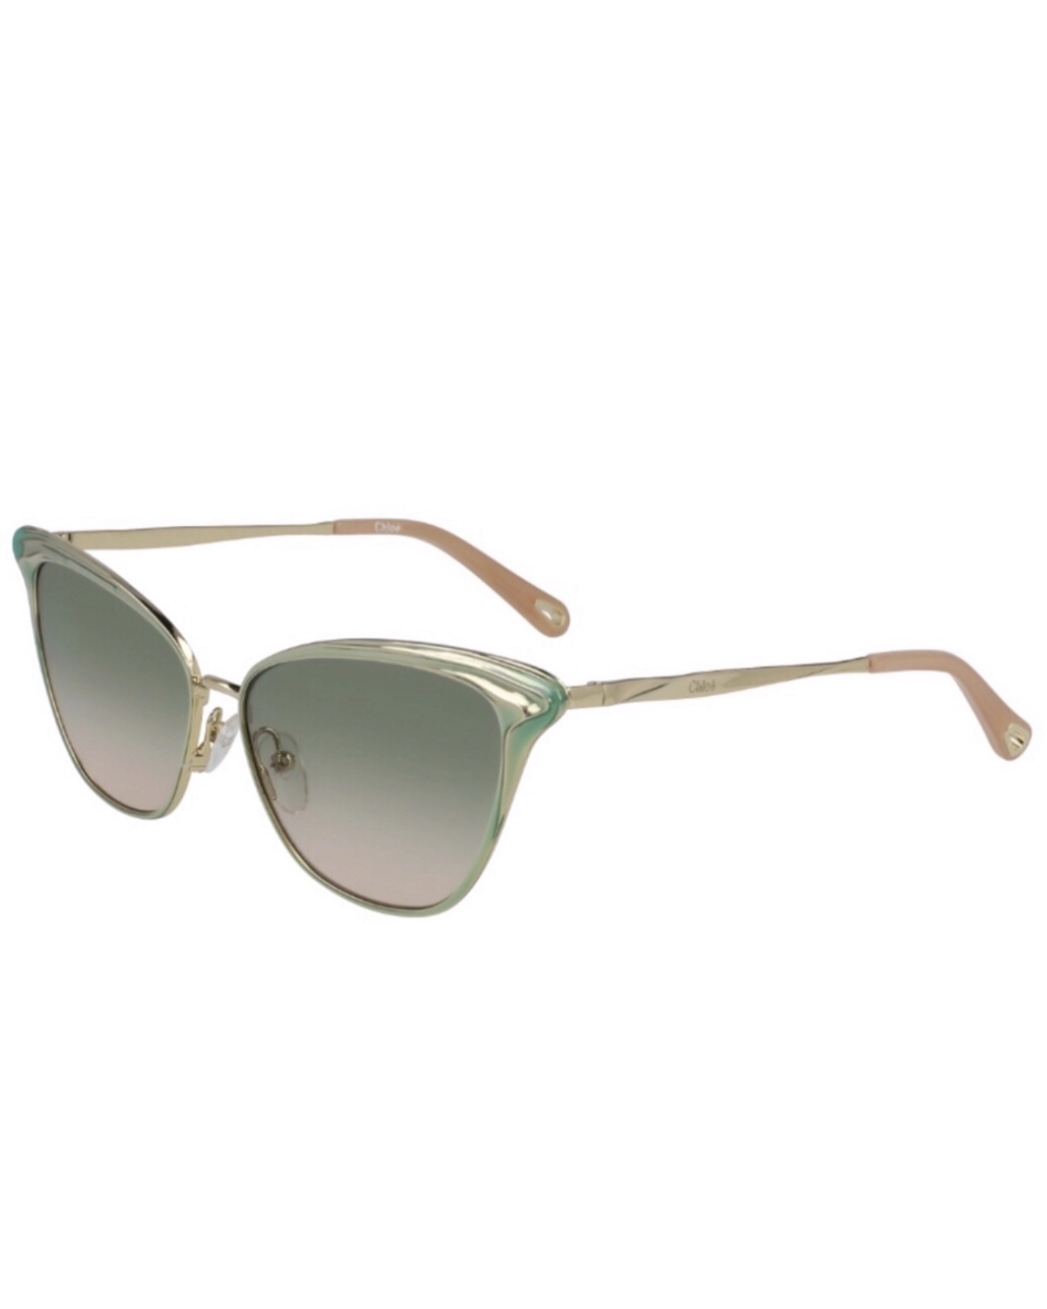 Chloe Blue Cateye Sunglasses - $350$175